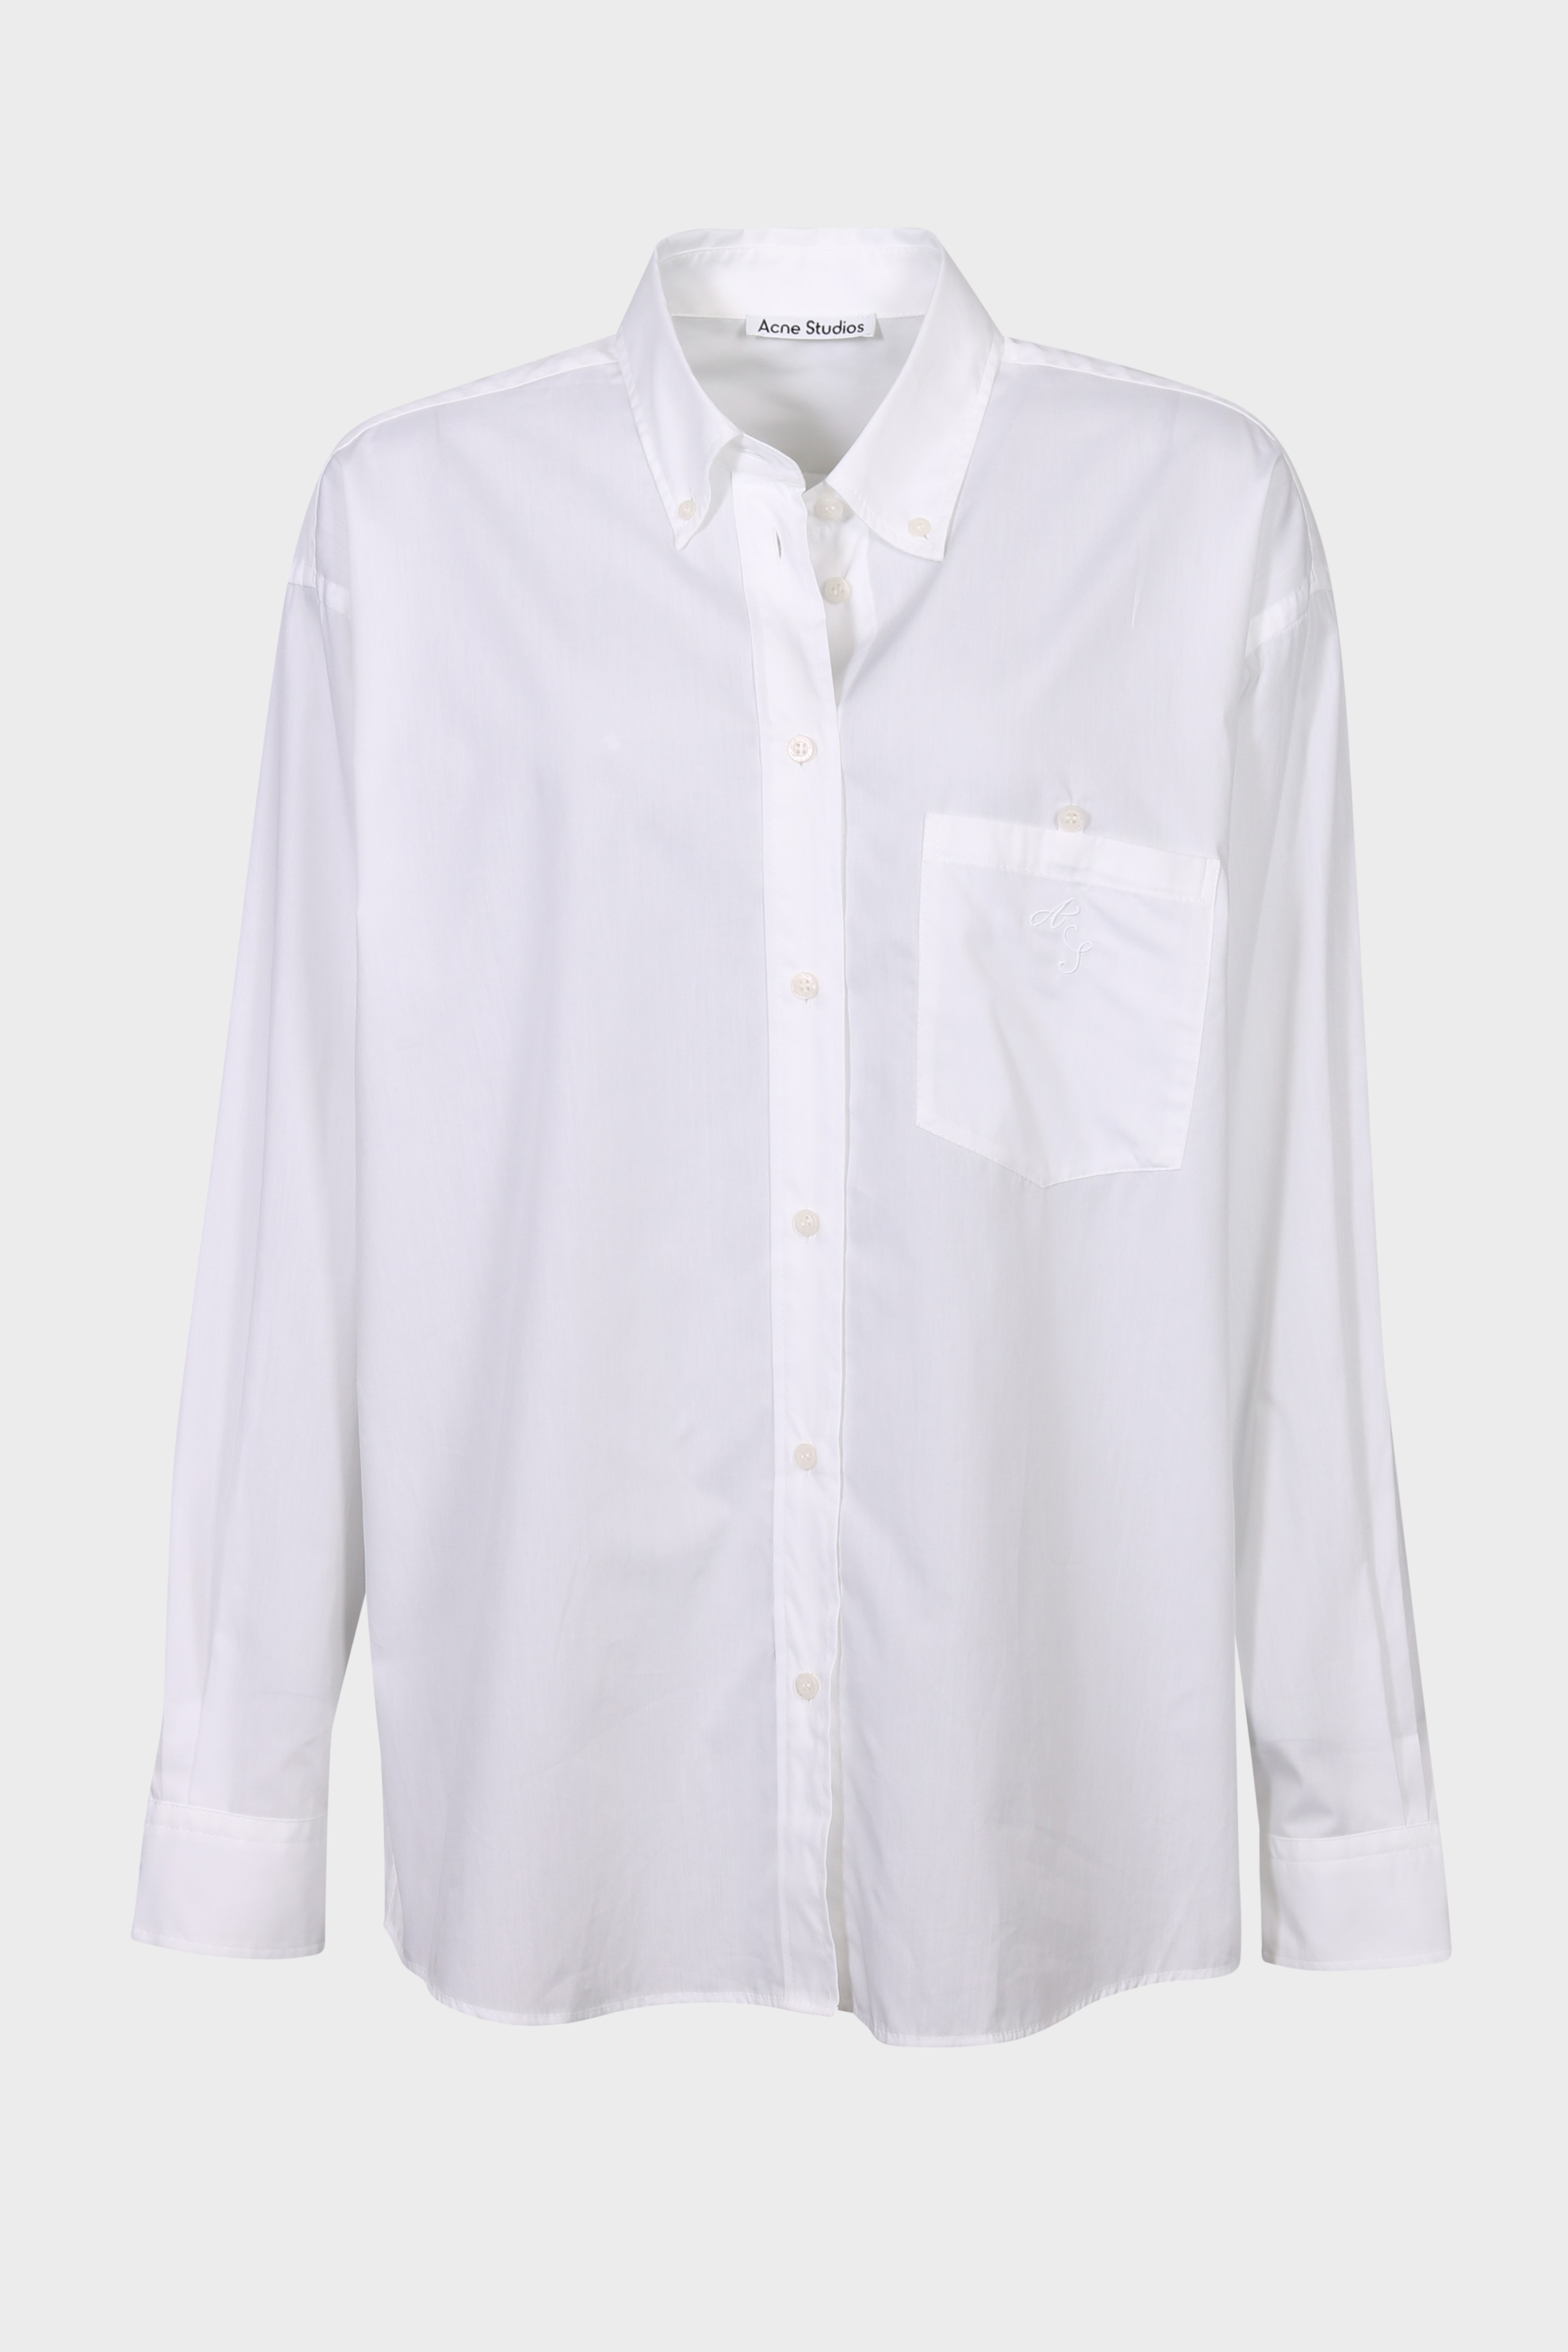 ACNE STUDIOS Oversize Shirt in White 32